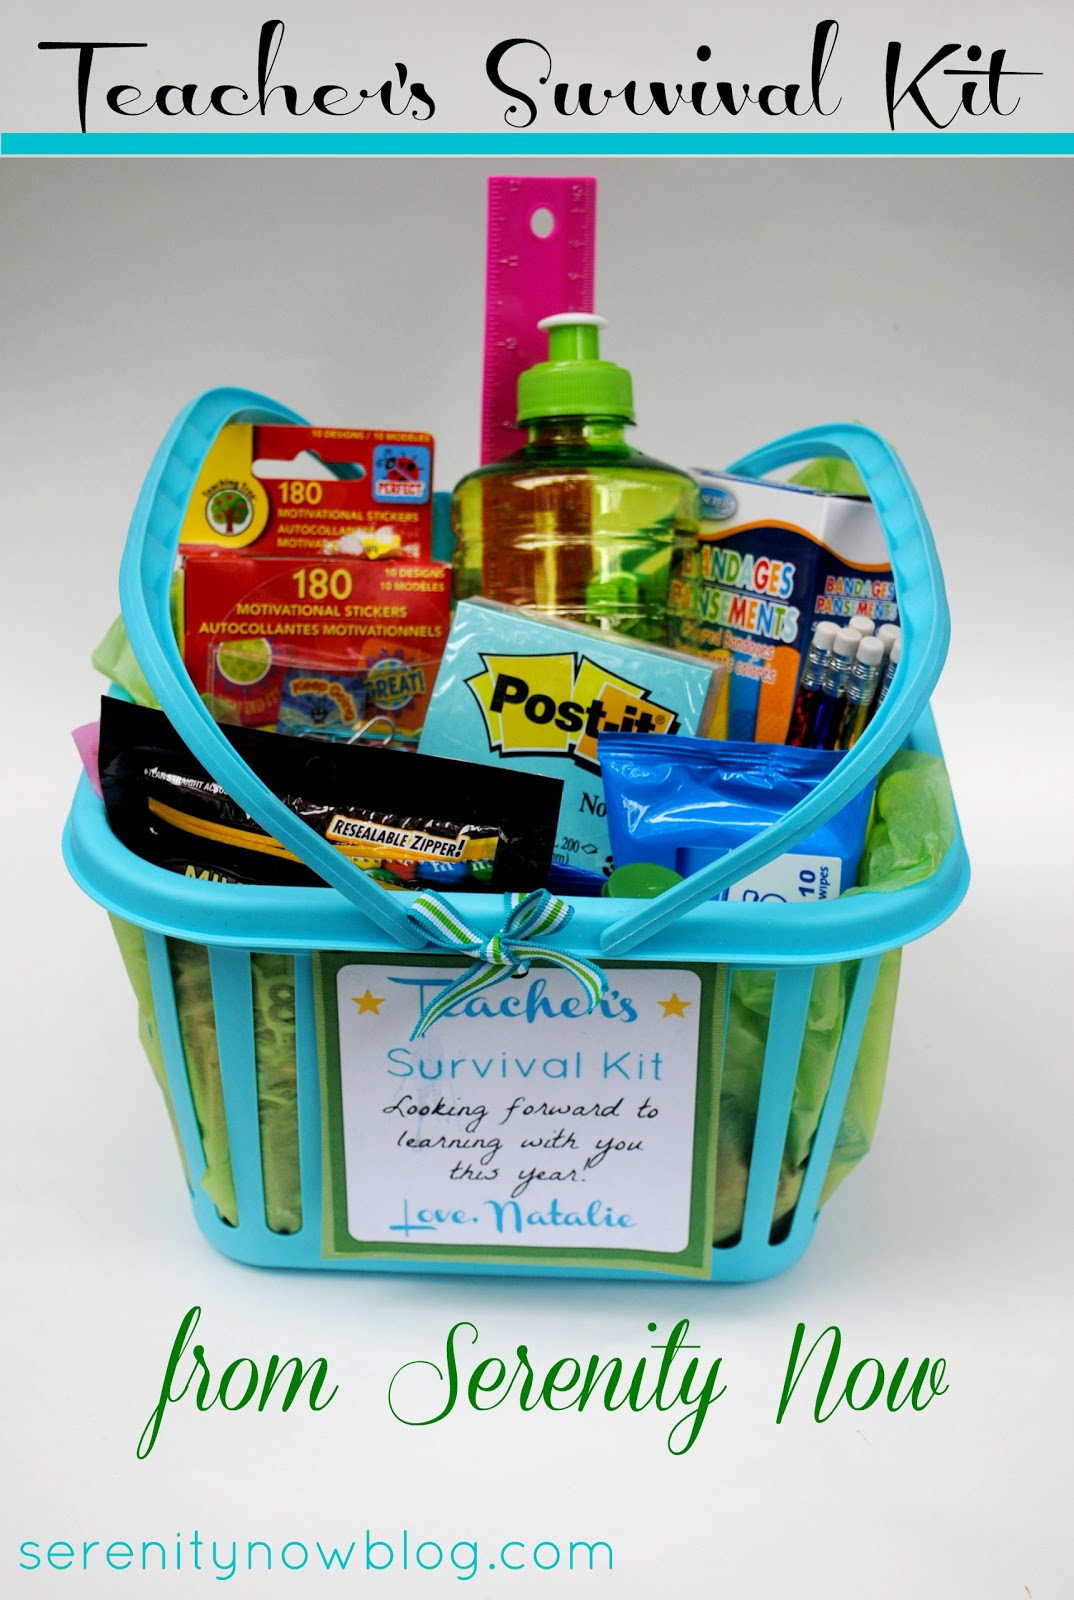 New Teacher Gift Basket Ideas
 Serenity Now Teacher Survival Kit 1st Day of School